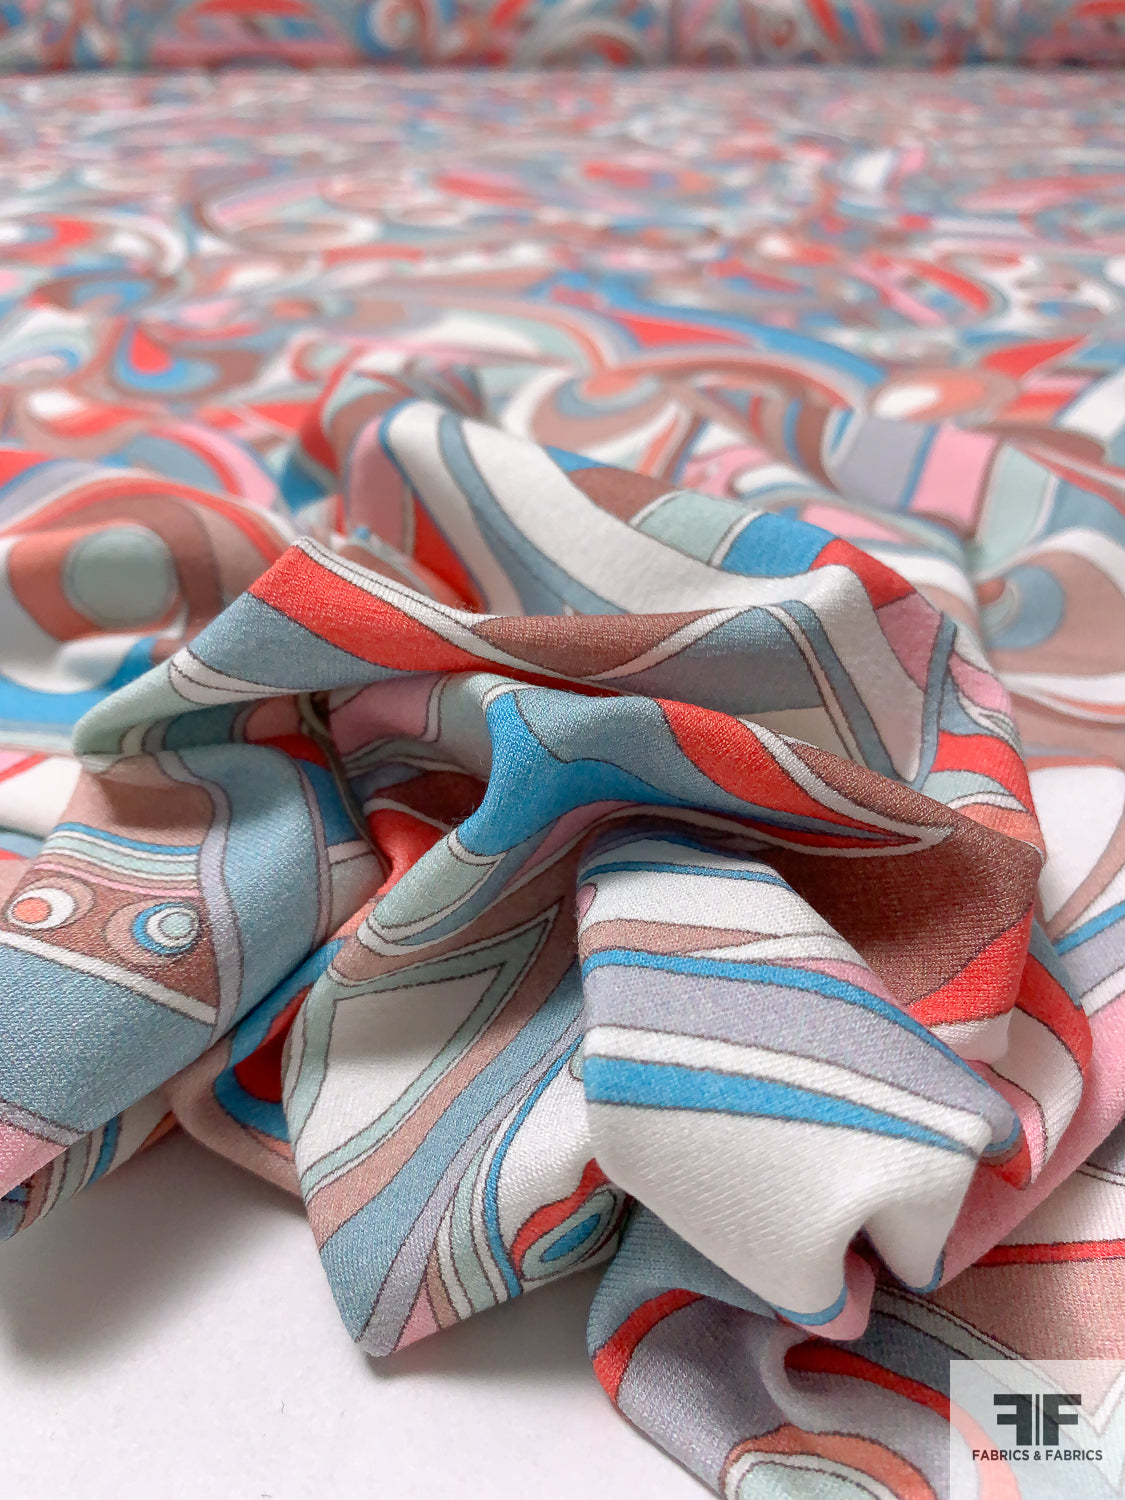 Pucci-esque Paisley Printed FABRICS – Jersey | Deep Knit FABRICS Fabrics Stretch Coral/Blues/Browns/Pink & - & Fabrics